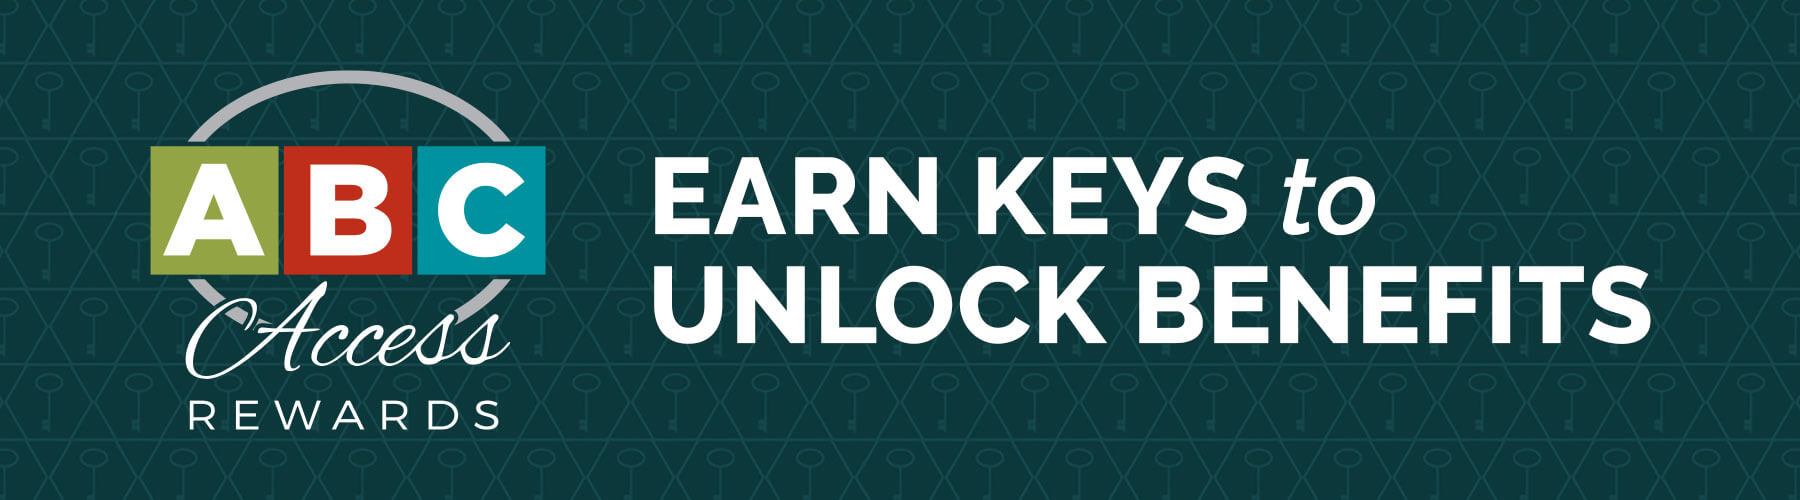 ABC Access Rewards. Earn Keys to Unlock Benefits.